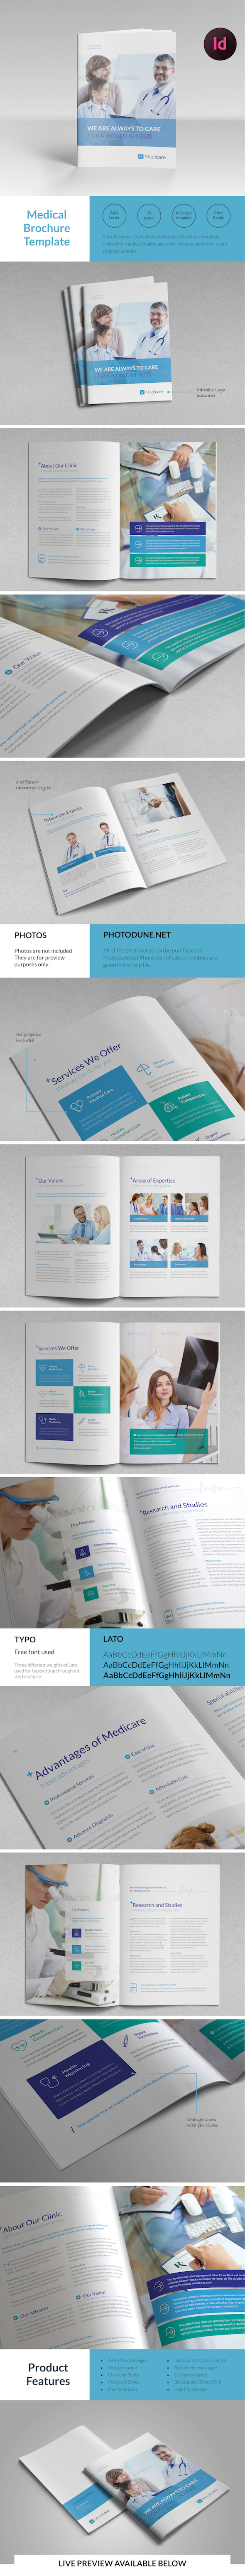 medical clinic Clinical hospital healthcare service brochure medicine clean sleek minimal modern template InDesign Layout